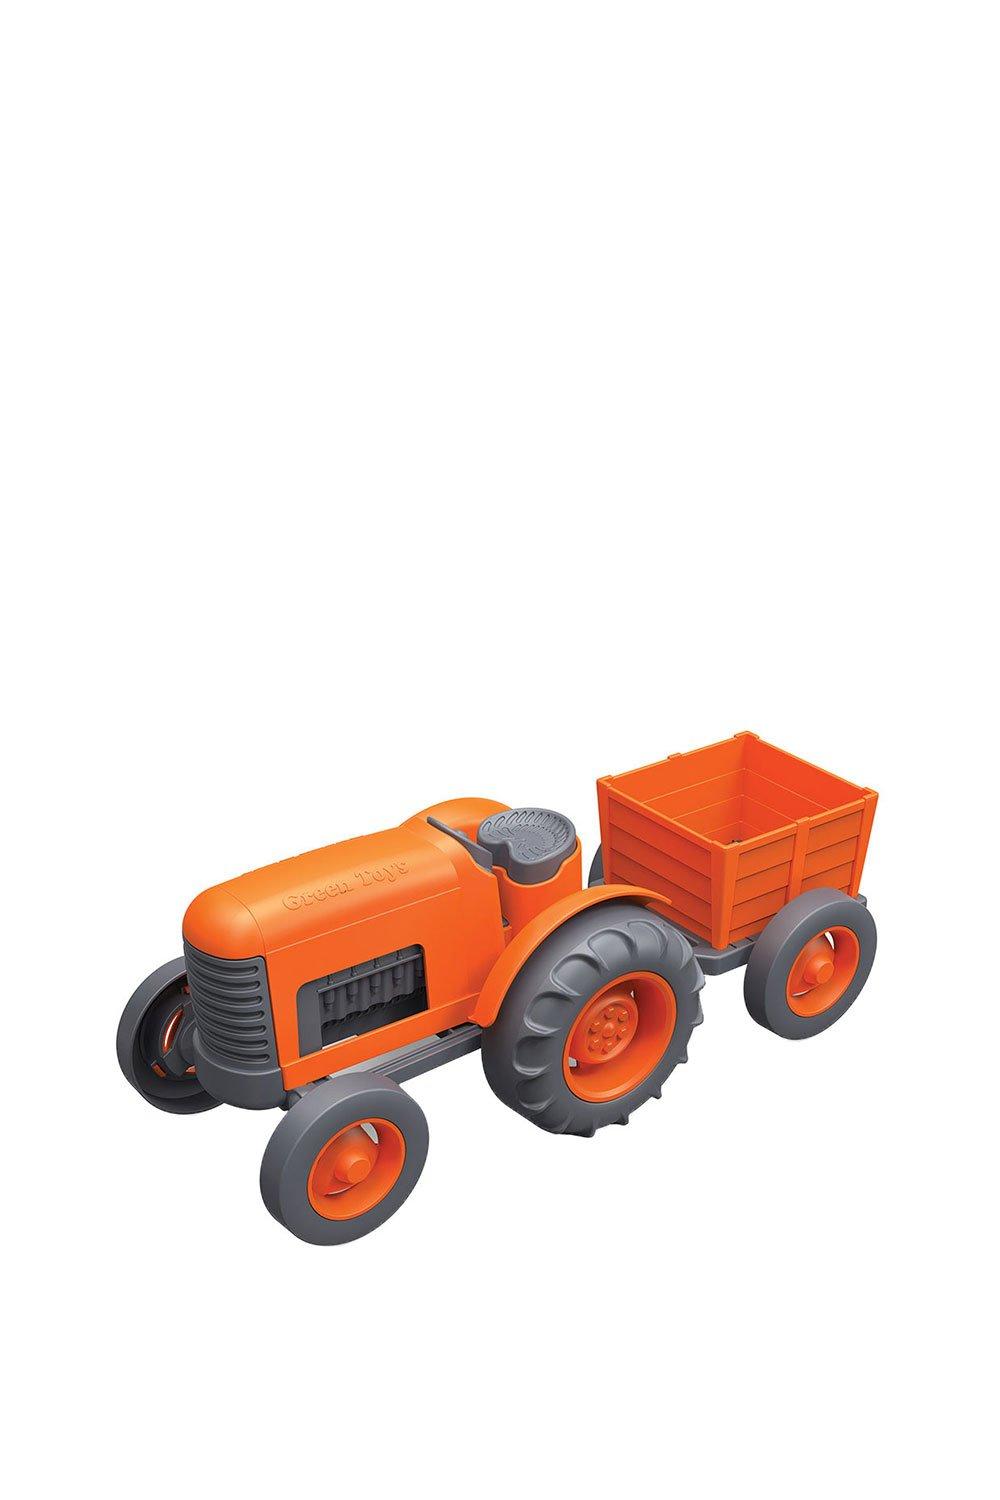 Green Toys Tractor Toy|orange